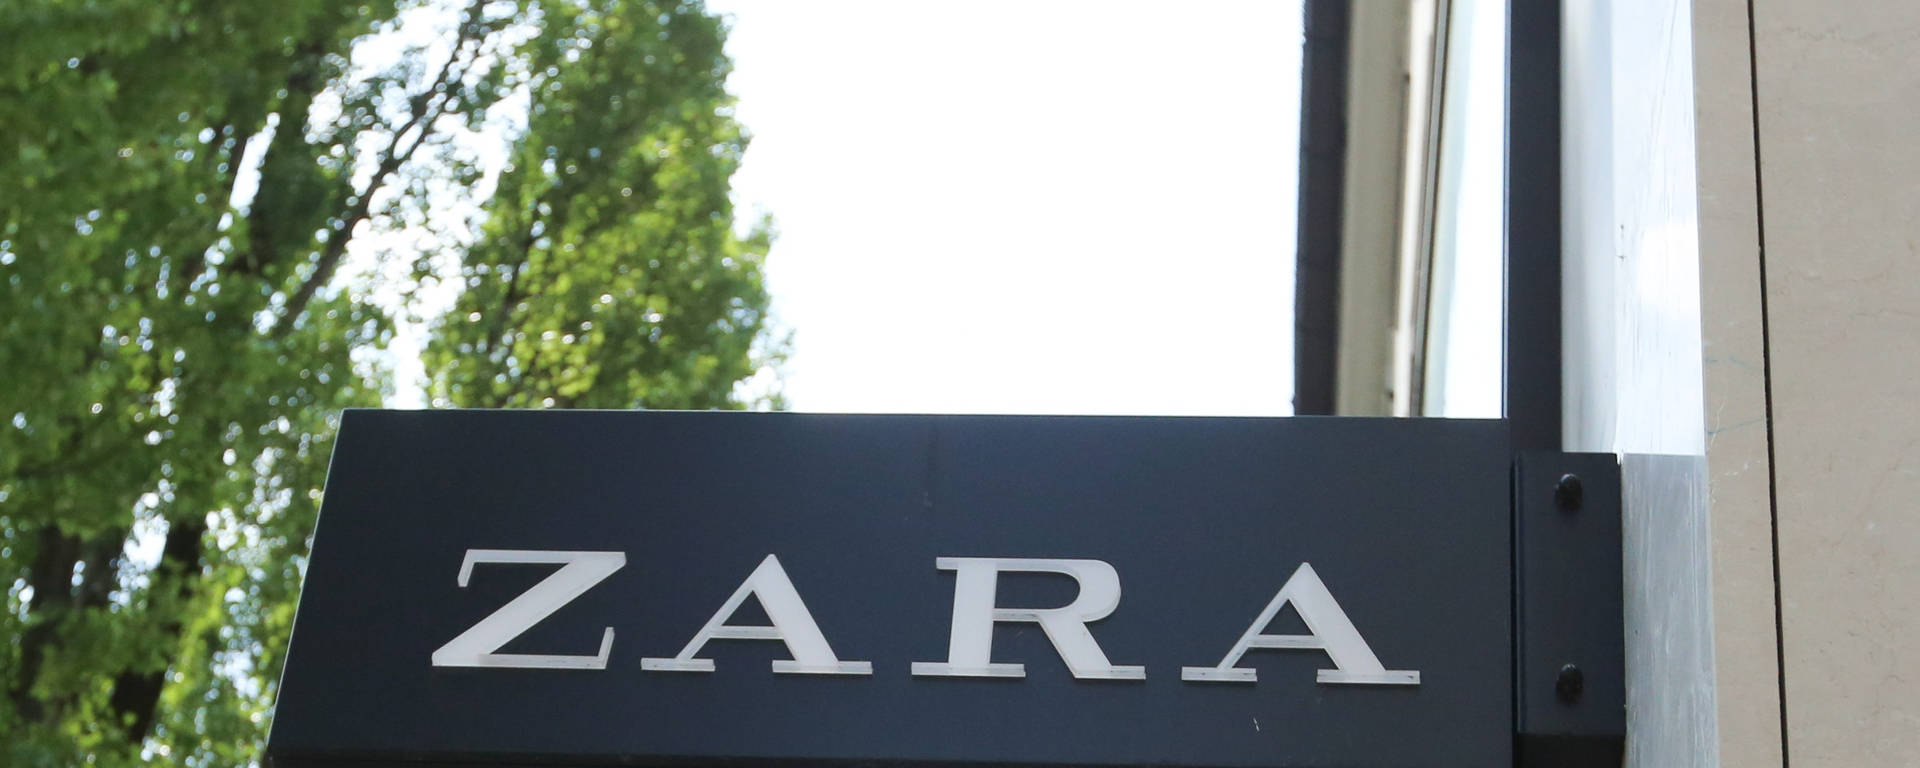 Zara Store Signage